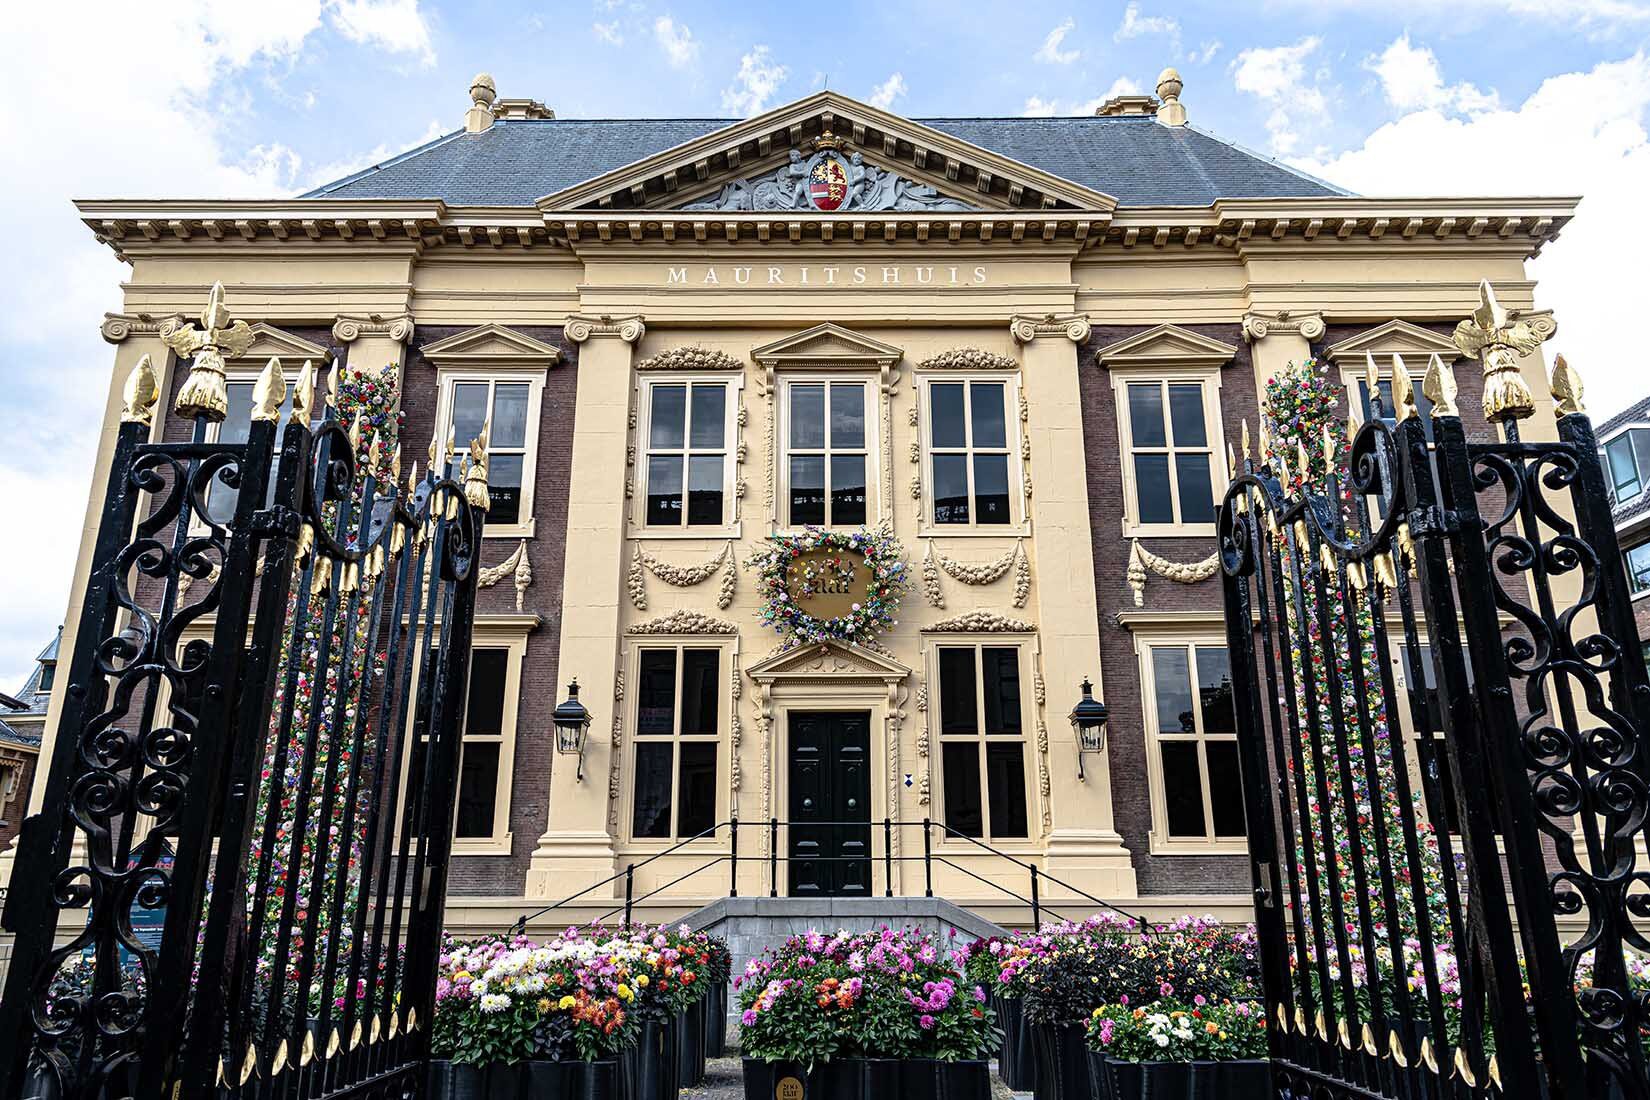 Mauritshuis - Den Haag